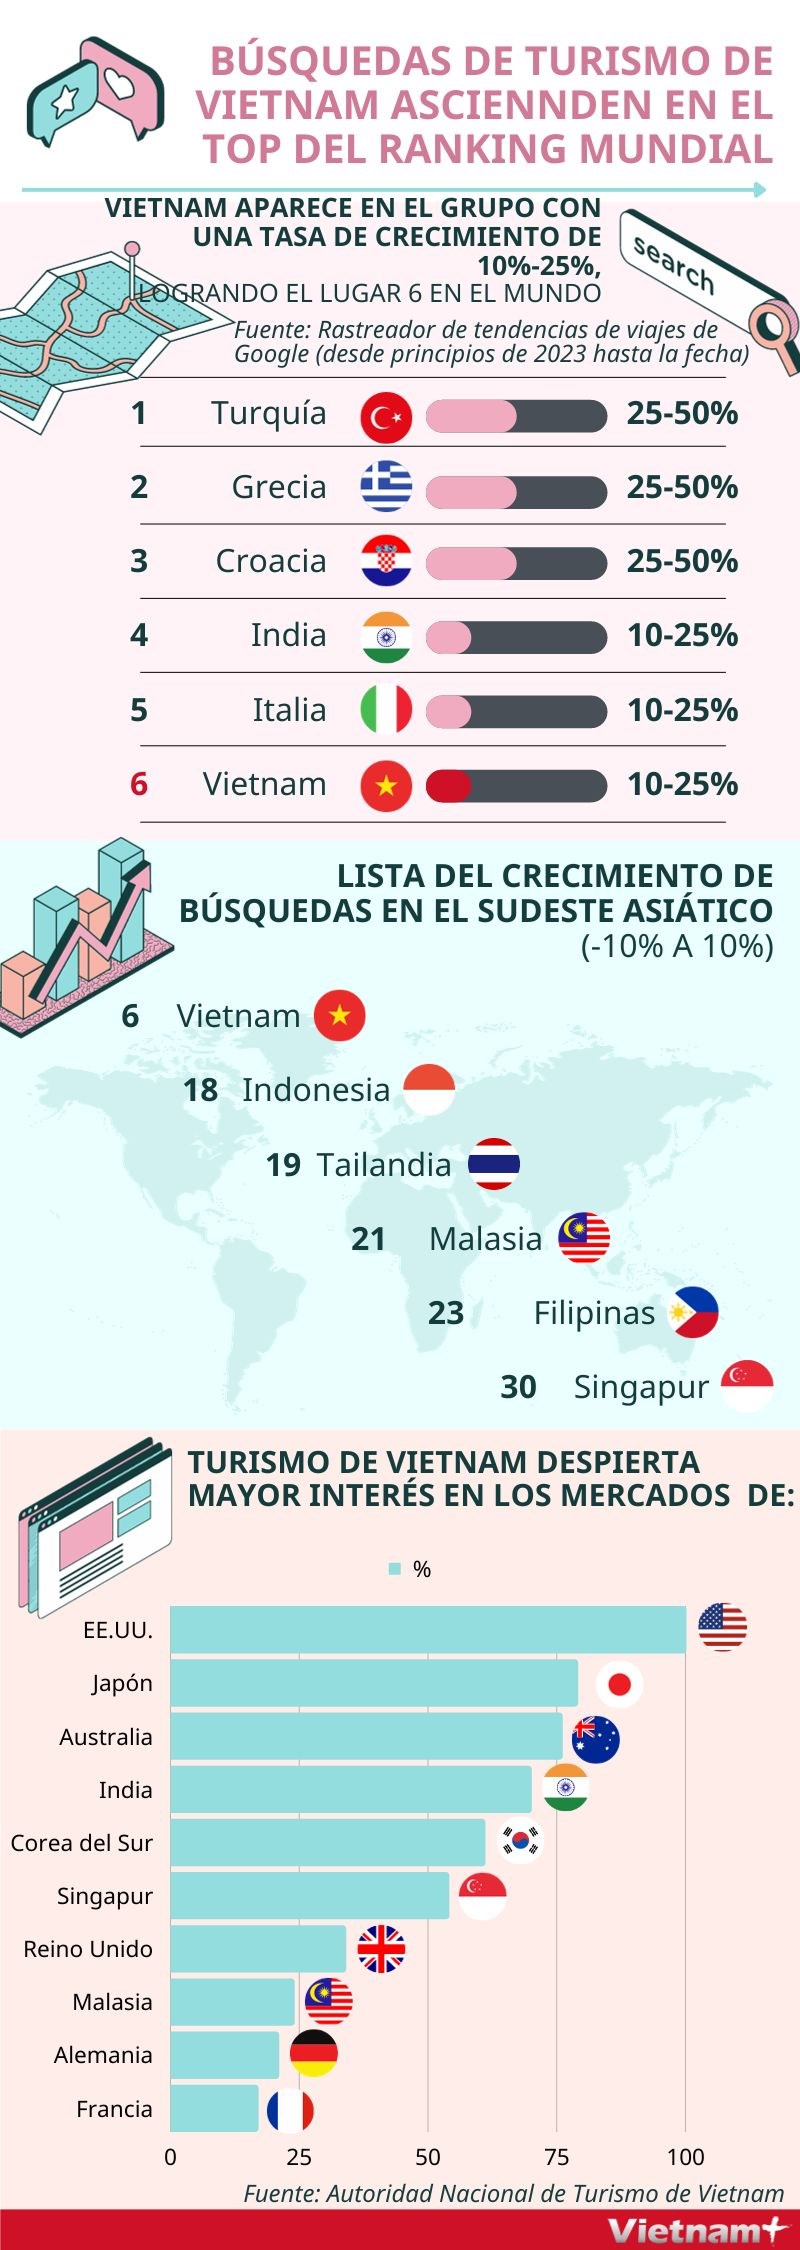 Volumen de busqueda de turismo de Vietnam ocupa en top ranking mundial hinh anh 1